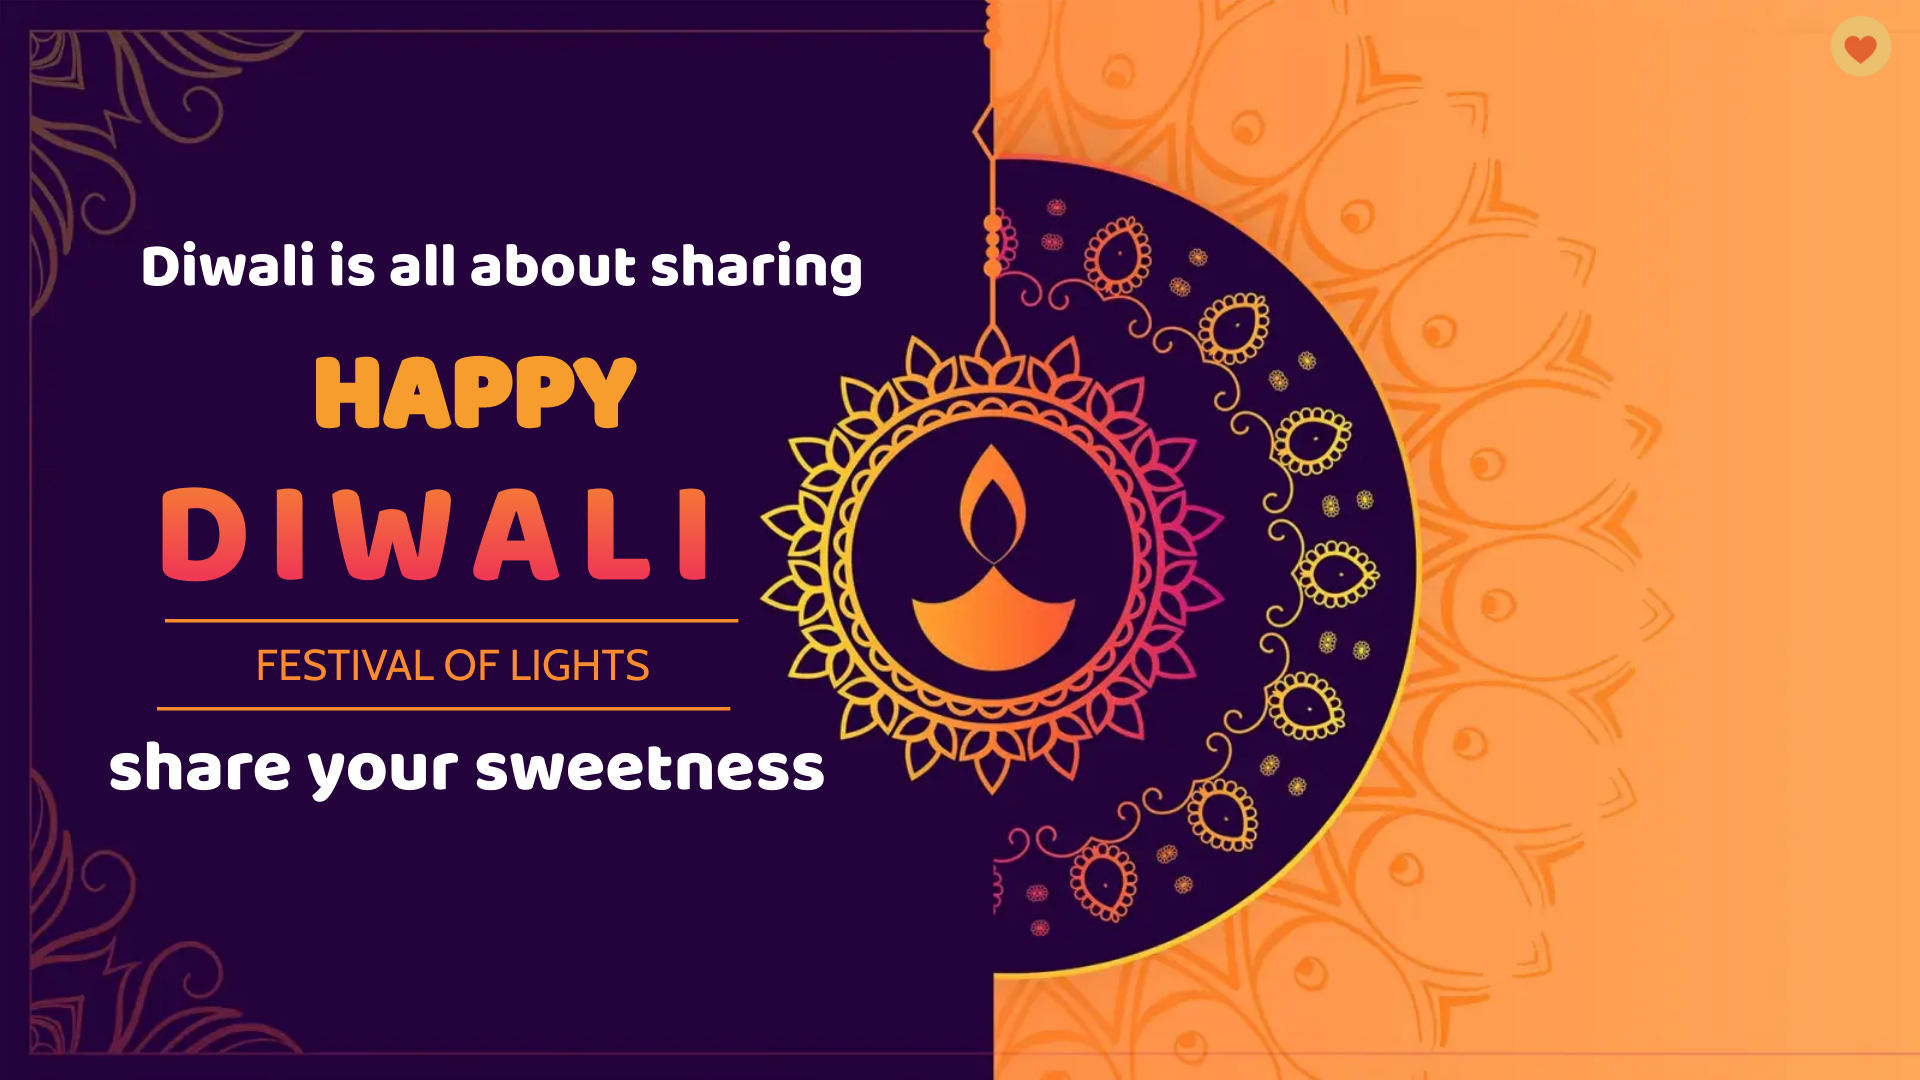 Happy Diwali - IOK